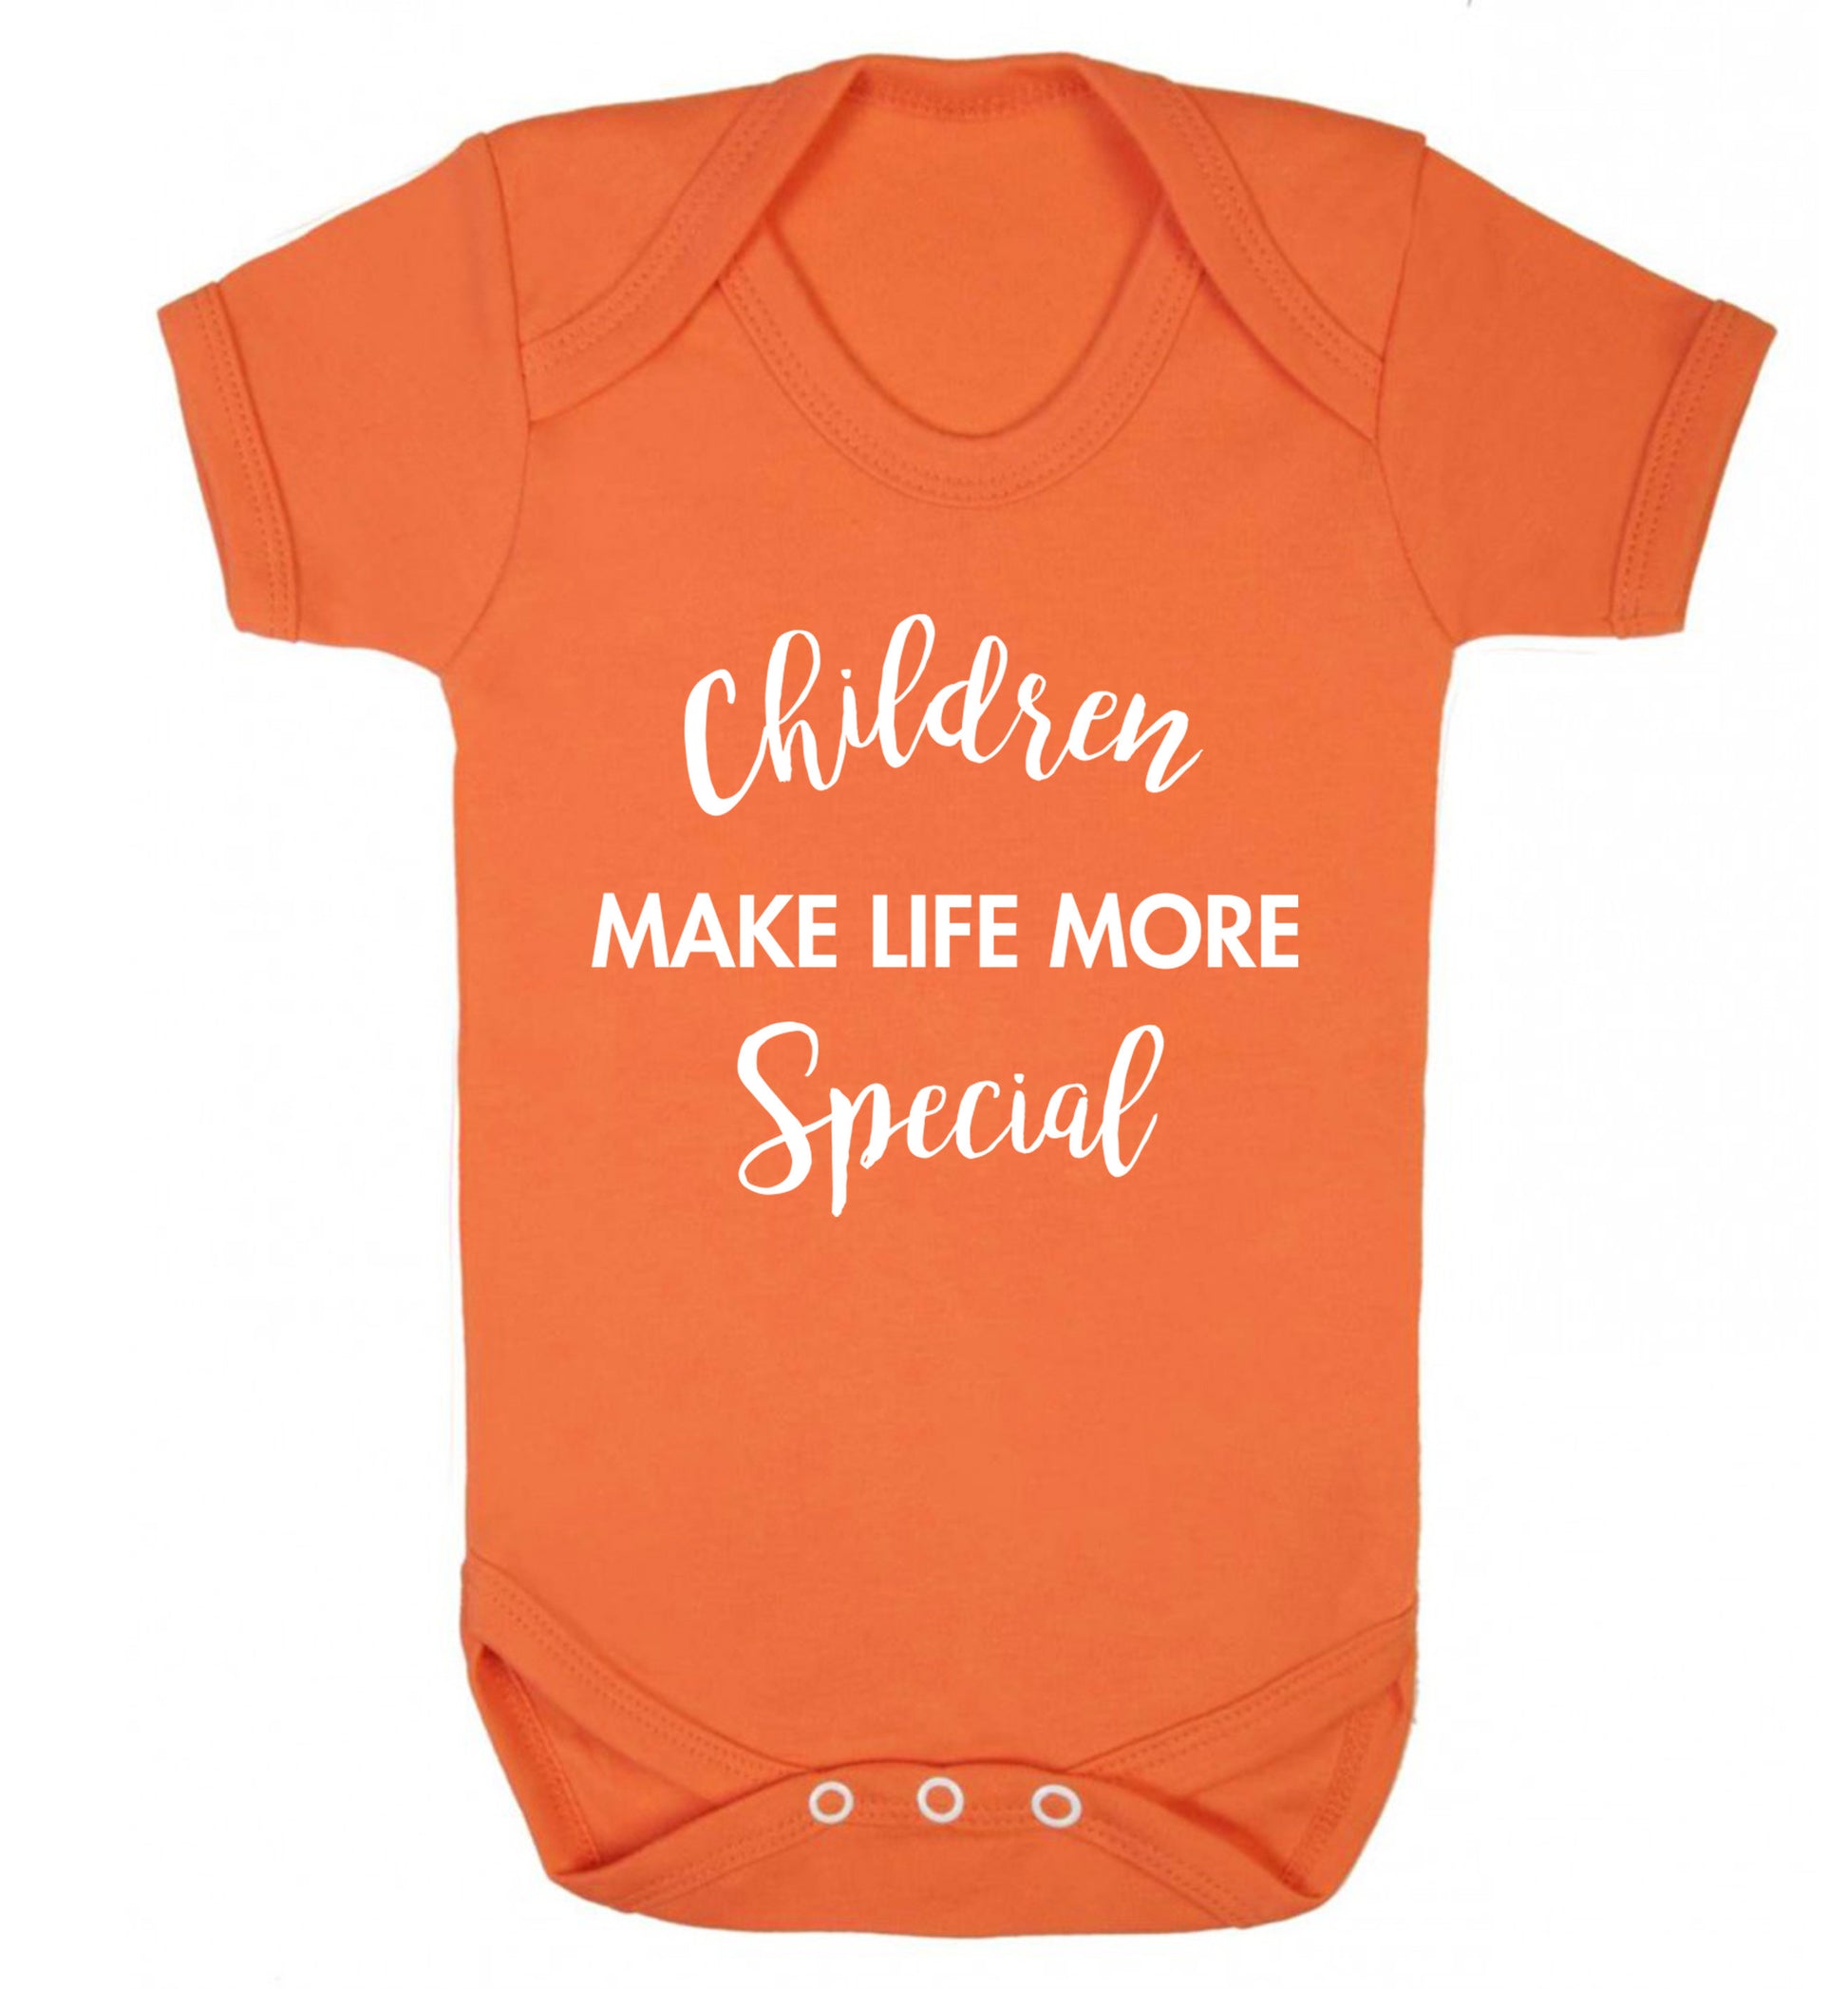 Children make life more special Baby Vest orange 18-24 months